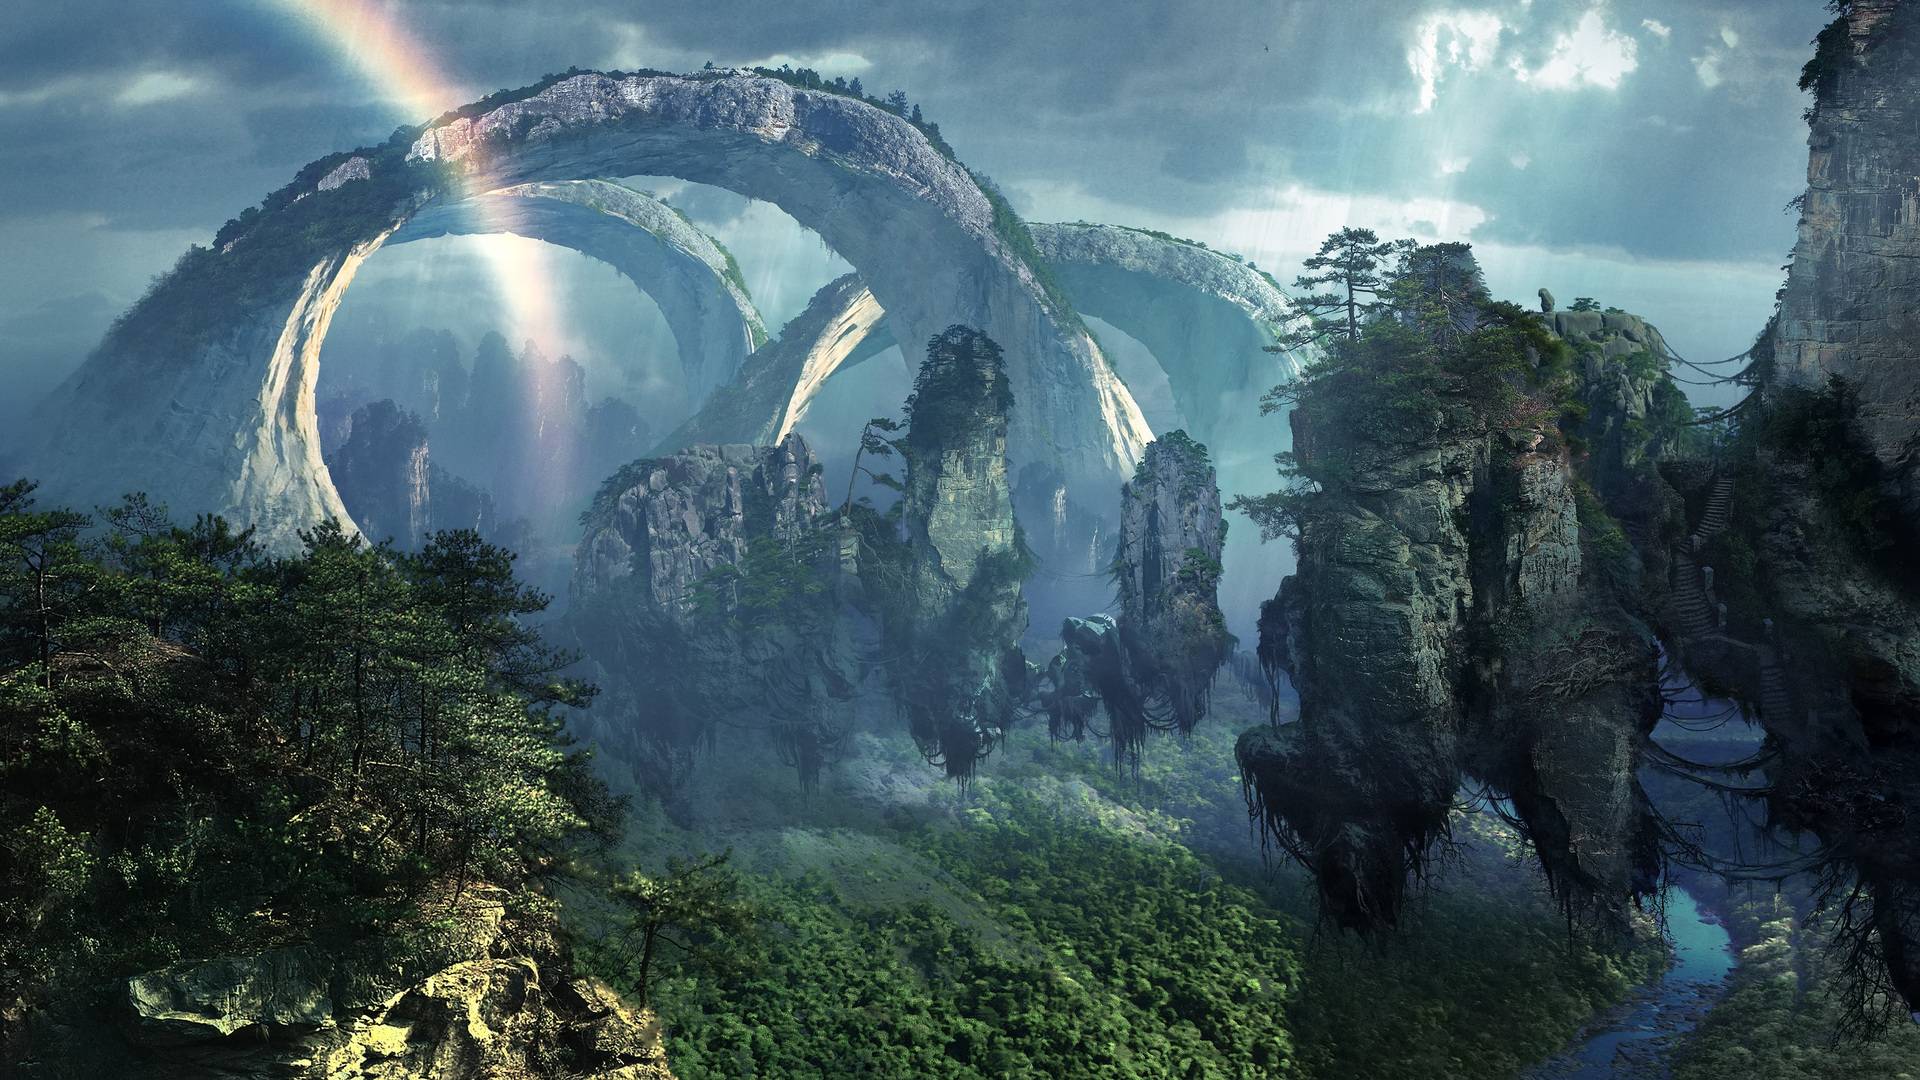 epic fantasy landscape wallpaper. vergapipe